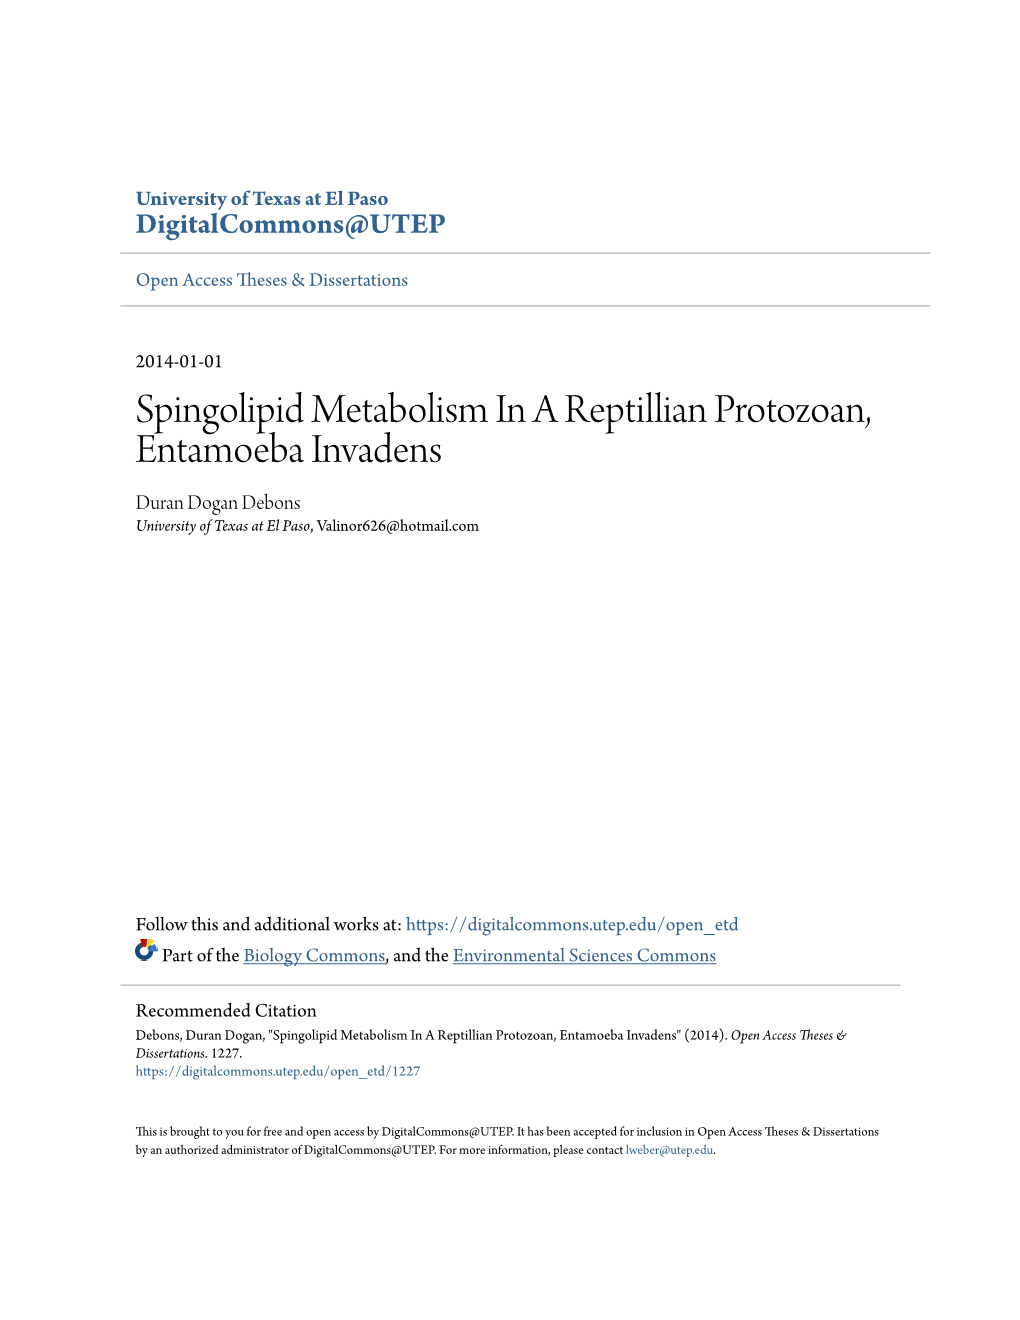 Spingolipid Metabolism in a Reptillian Protozoan, Entamoeba Invadens Duran Dogan Debons University of Texas at El Paso, Valinor626@Hotmail.Com